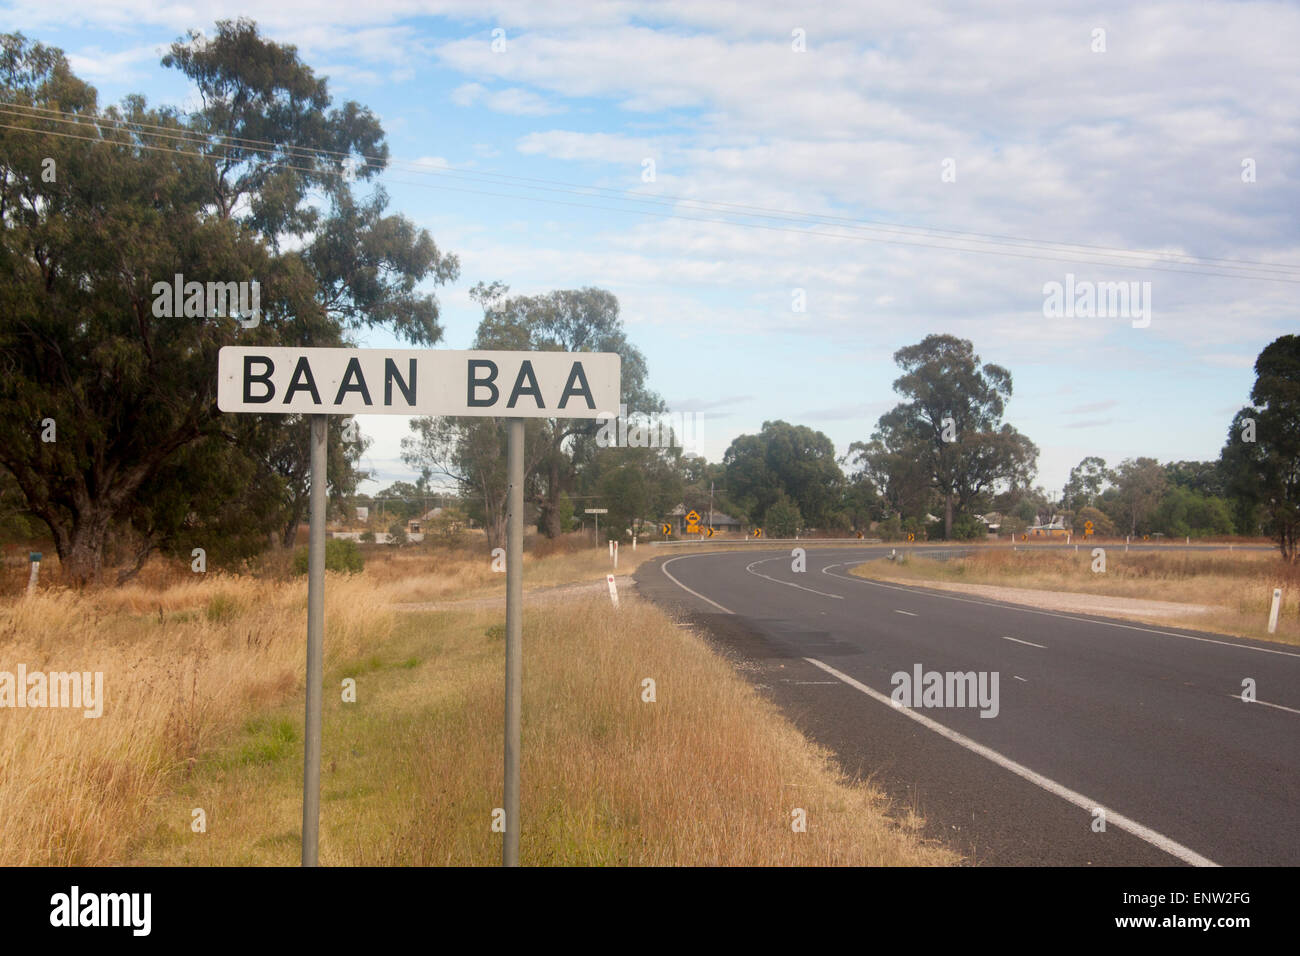 Baan Baa ungewöhnliche skurrile humorvolle lustige amüsante legen Namen Dorf in New South Wales NSW Australia Stockfoto